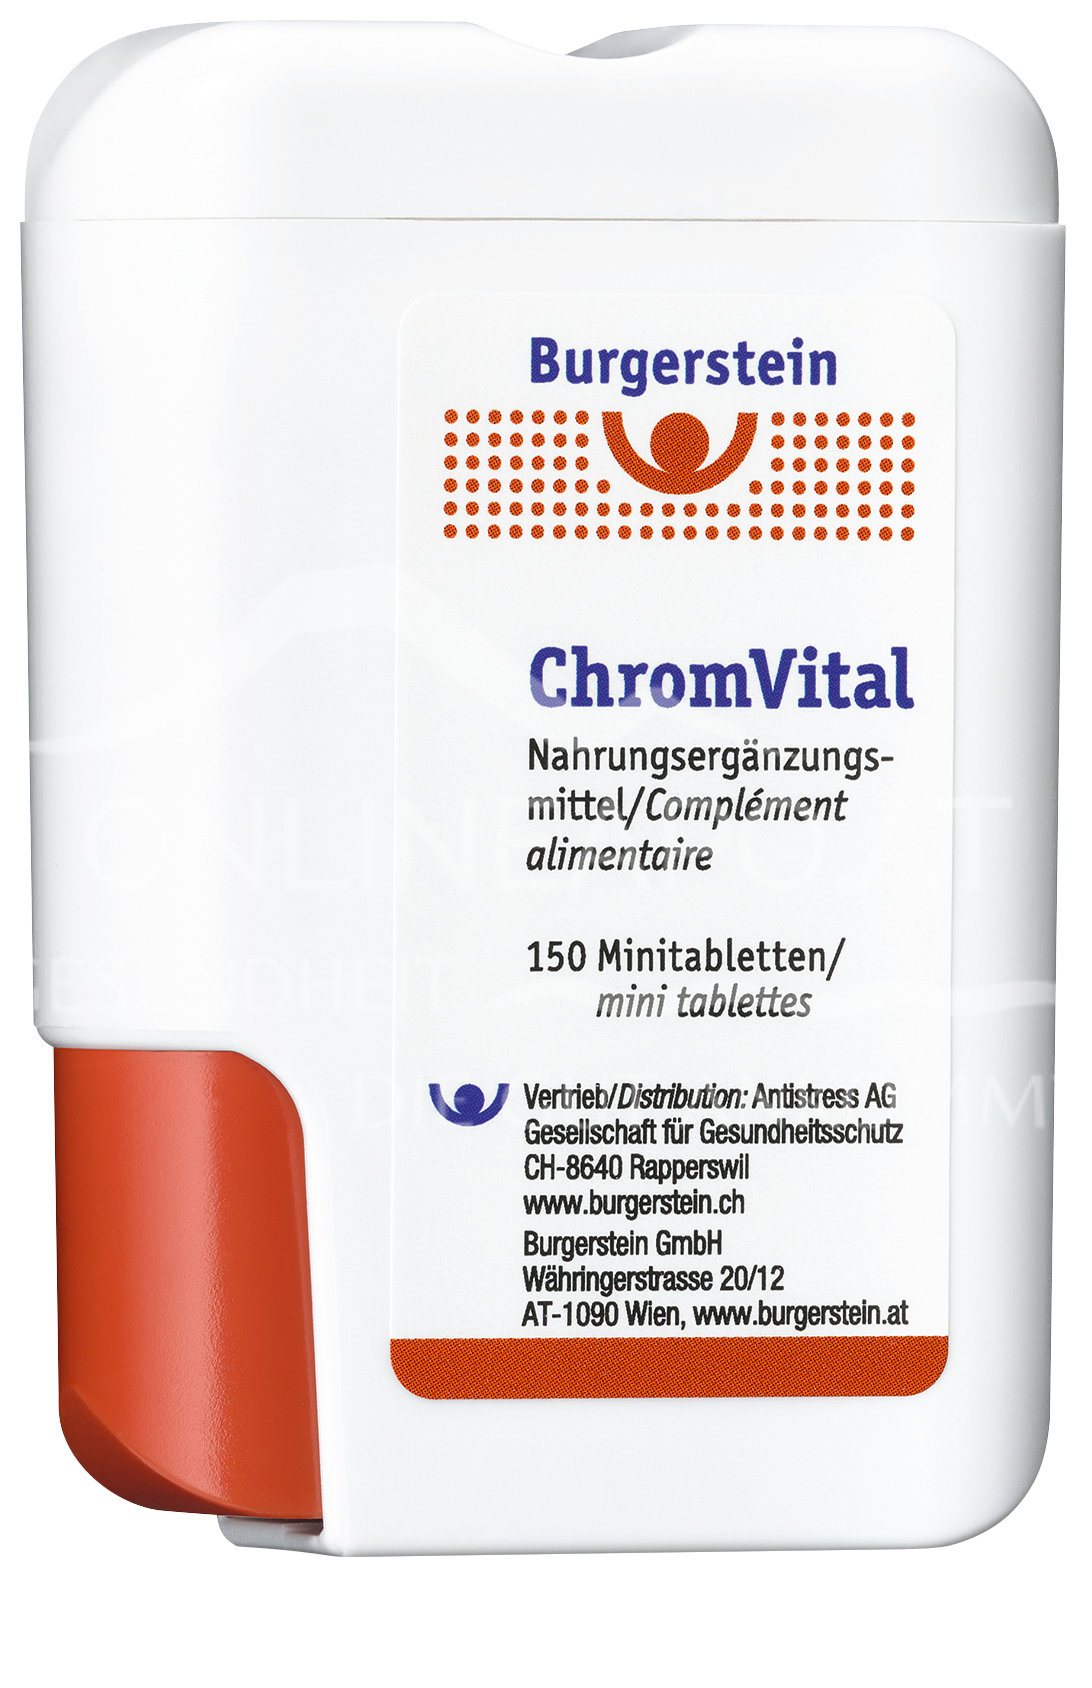 Burgerstein ChromVital Minitabletten